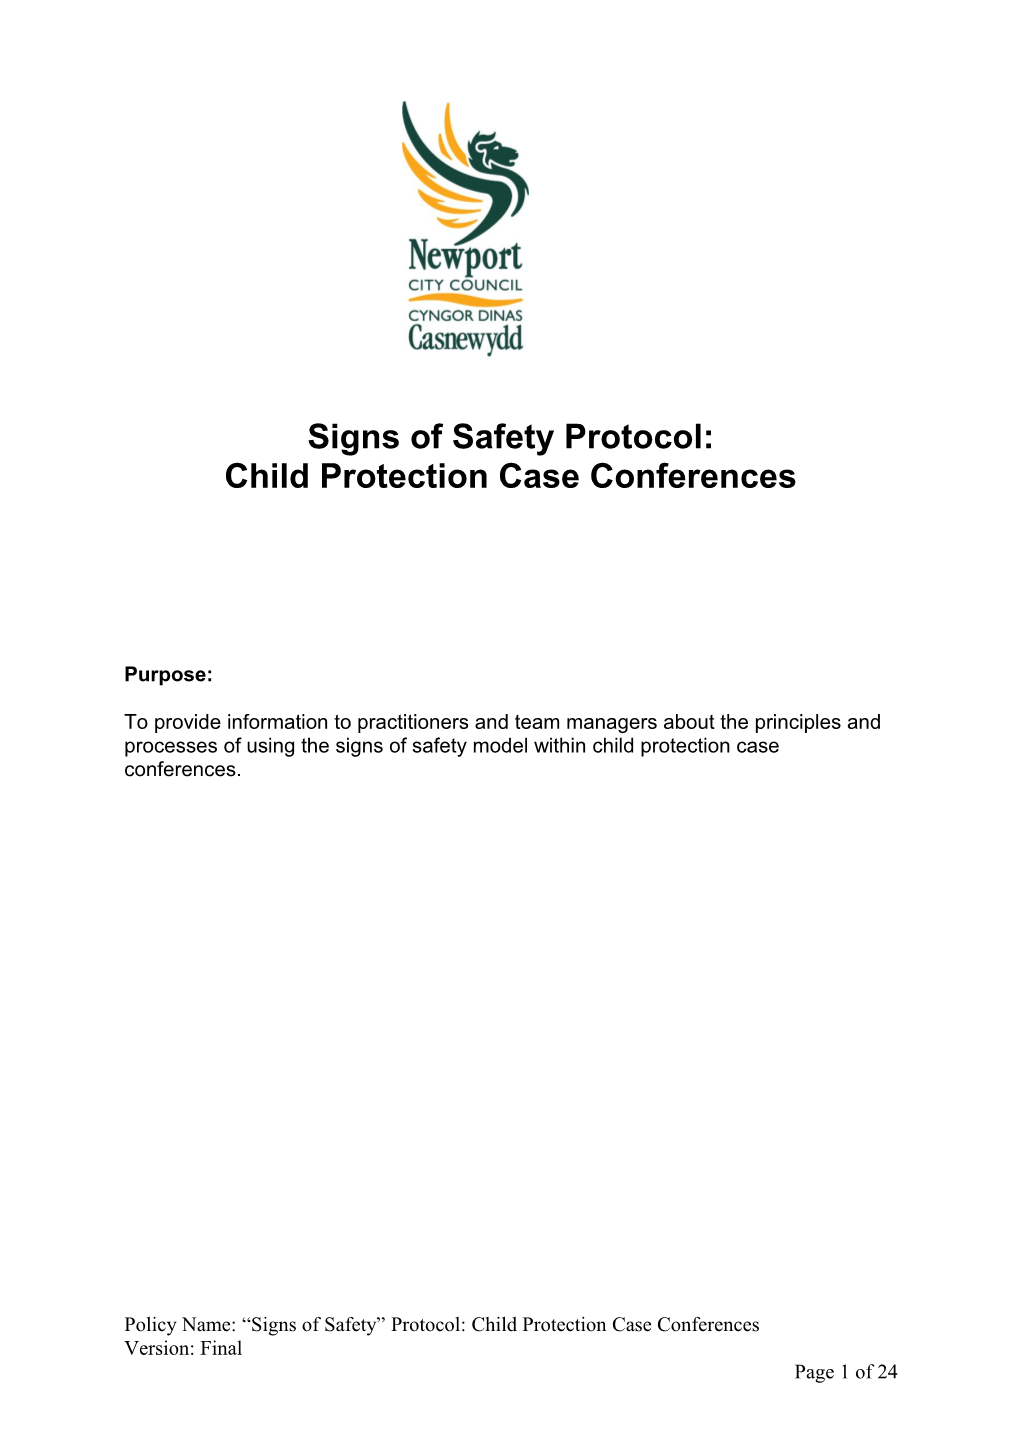 Child Protection Case Conferences